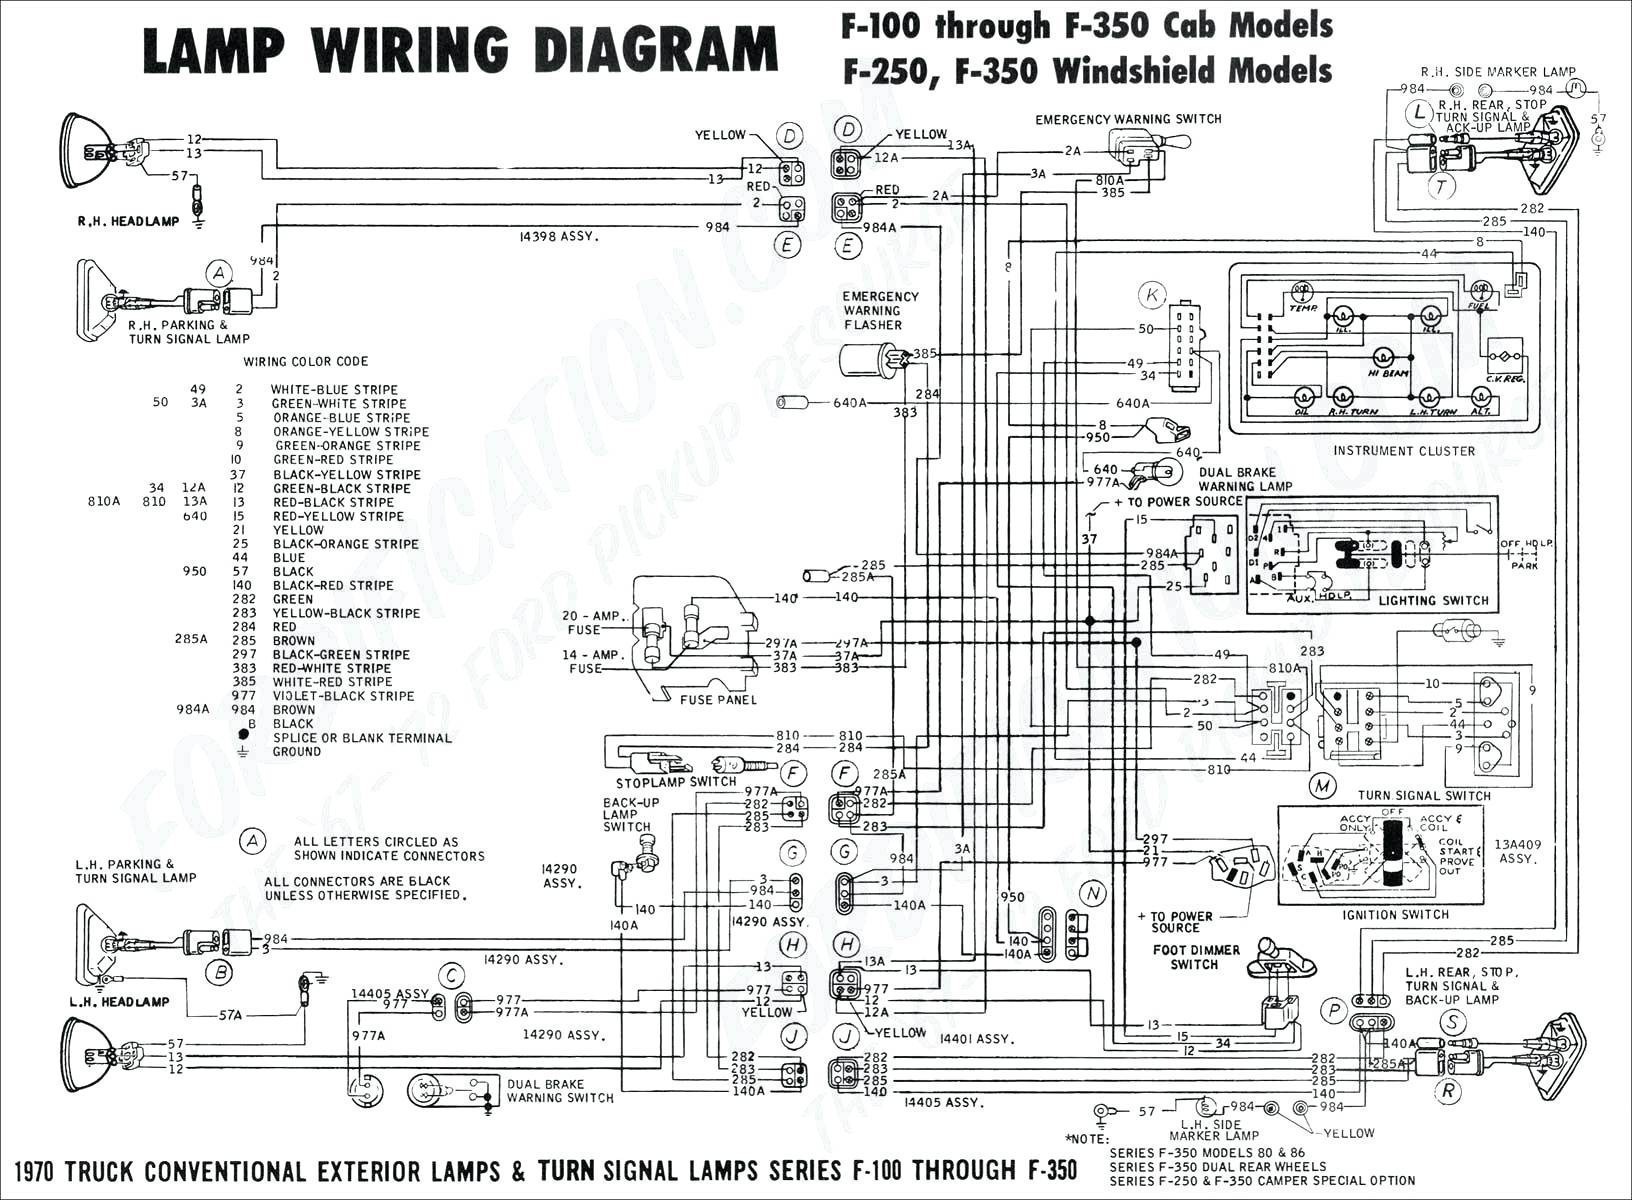 12 Volt Switch Wiring Diagram Rebel Light Switch Wiring Schematic Of 12 Volt Switch Wiring Diagram